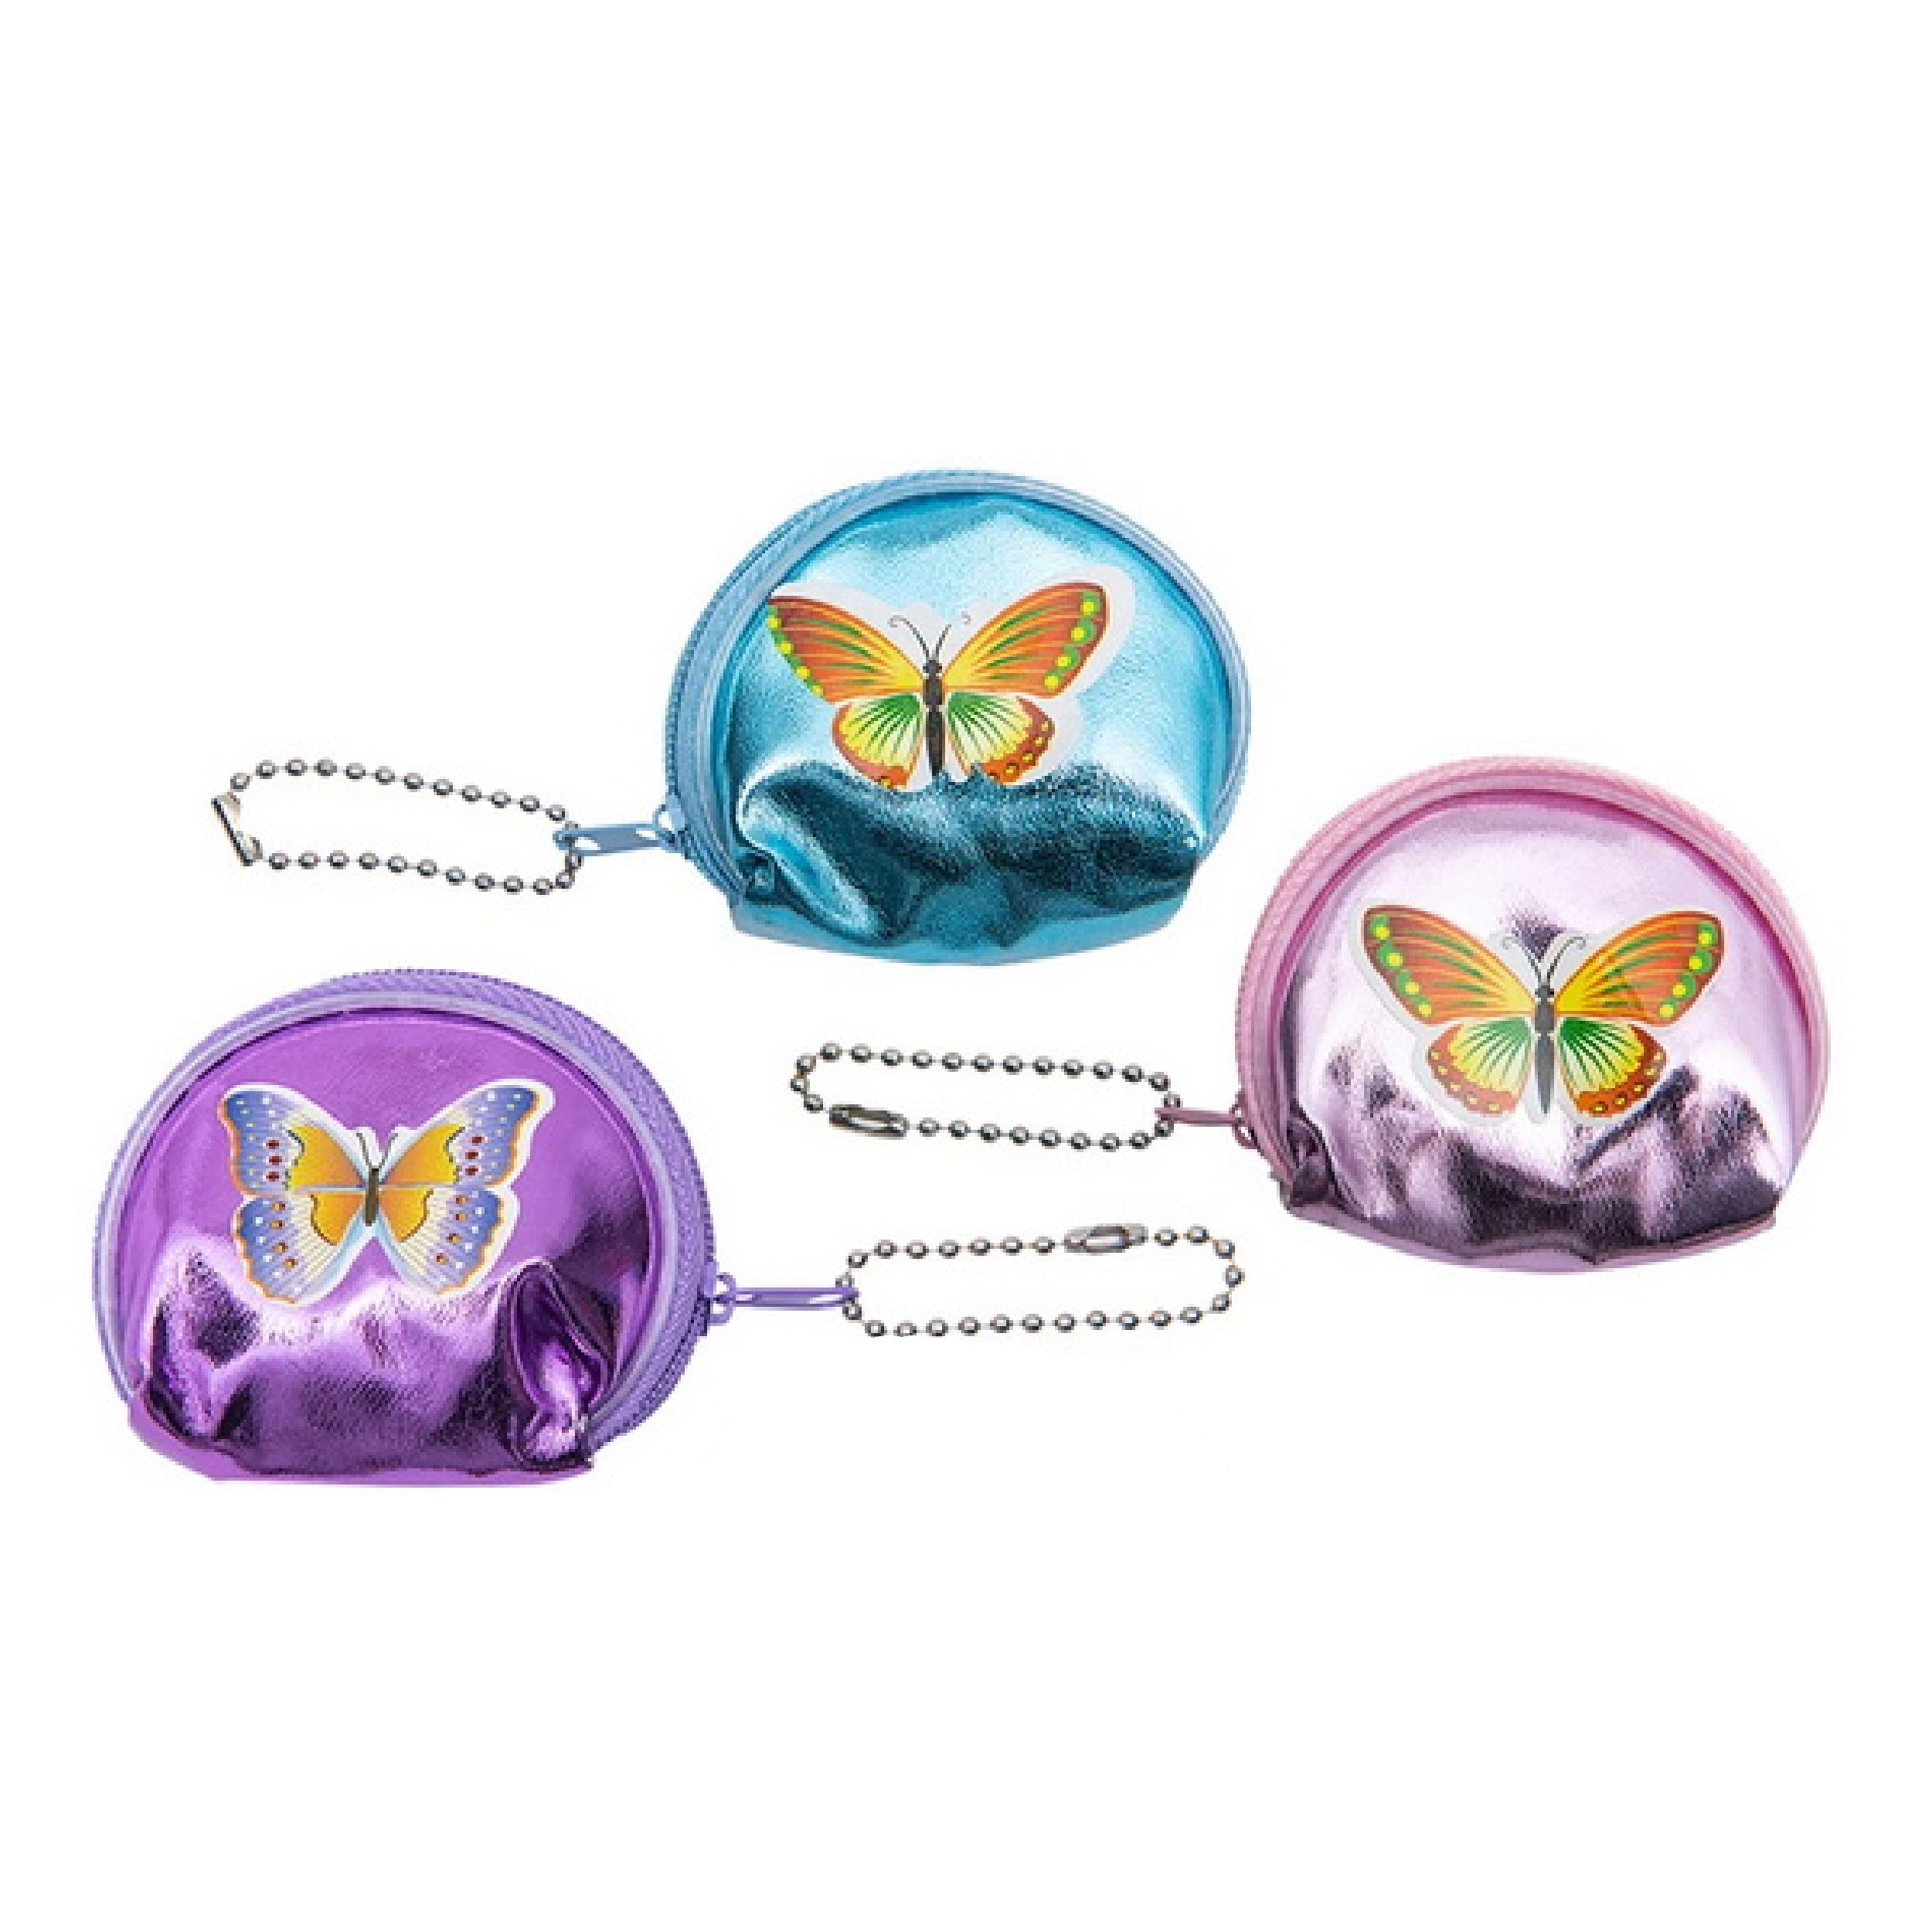 Butterfly Purse kids toys ( 1 Dozen=$12.99)